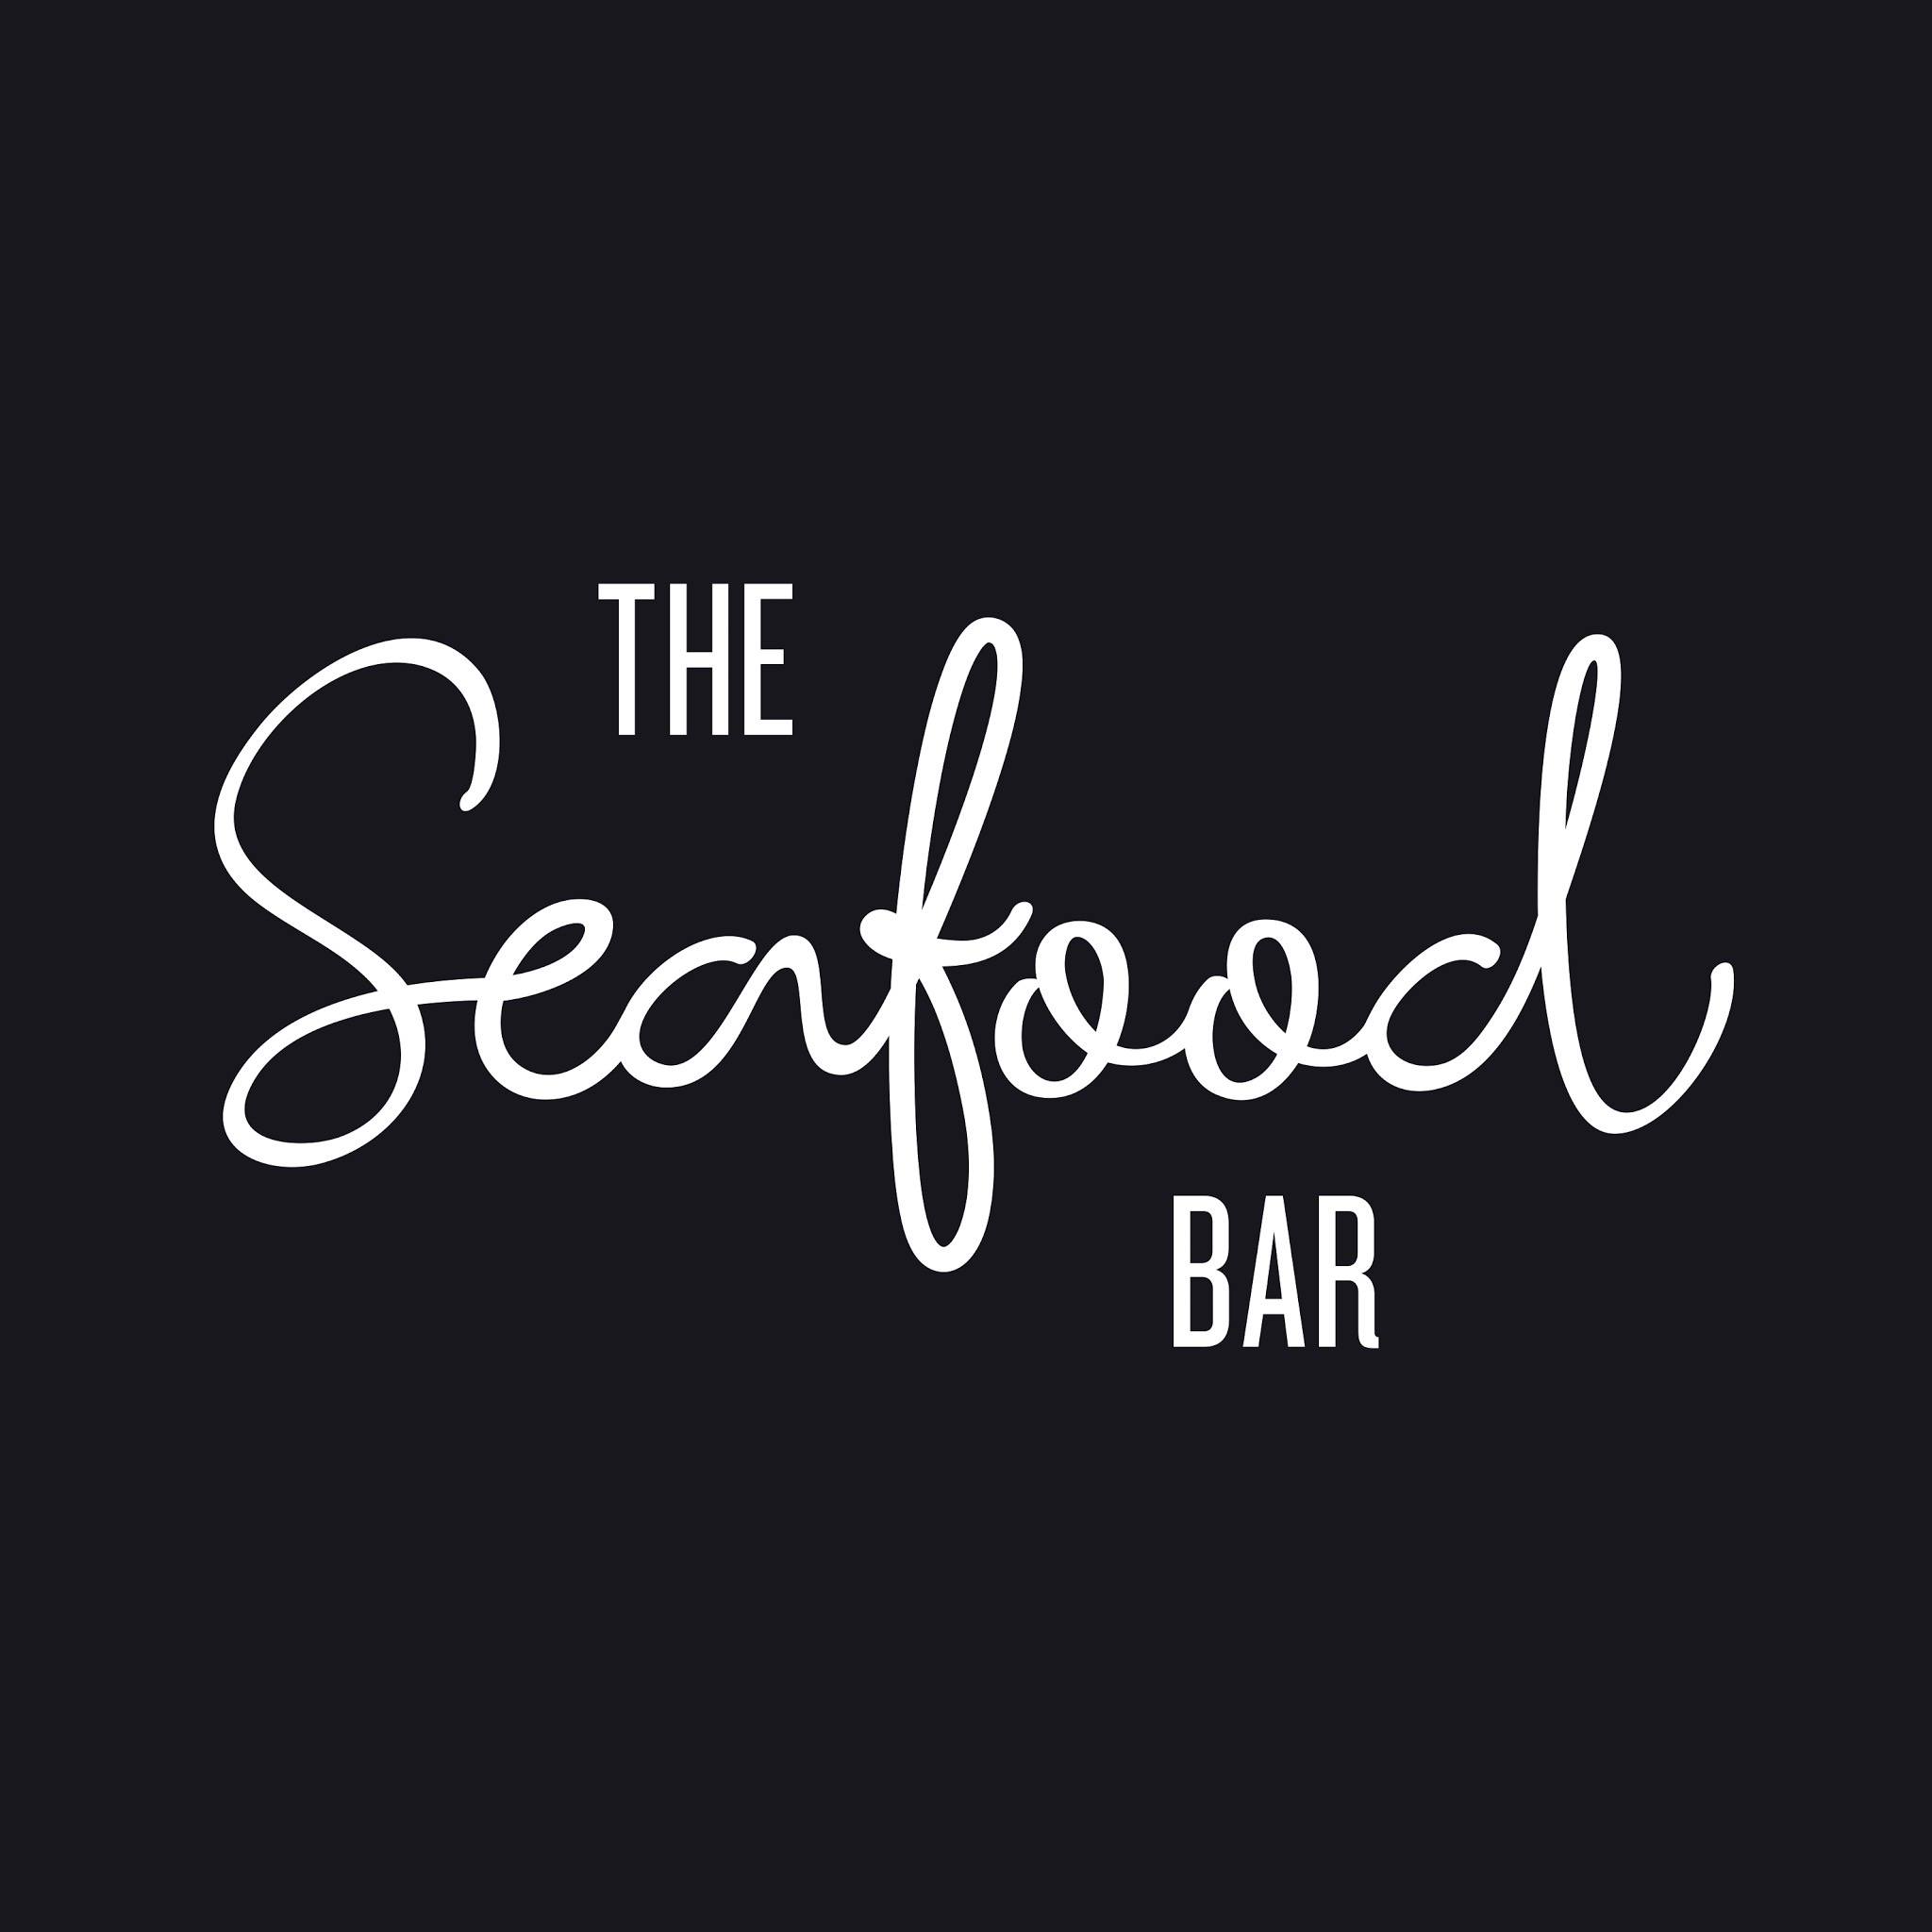 Seafood bar